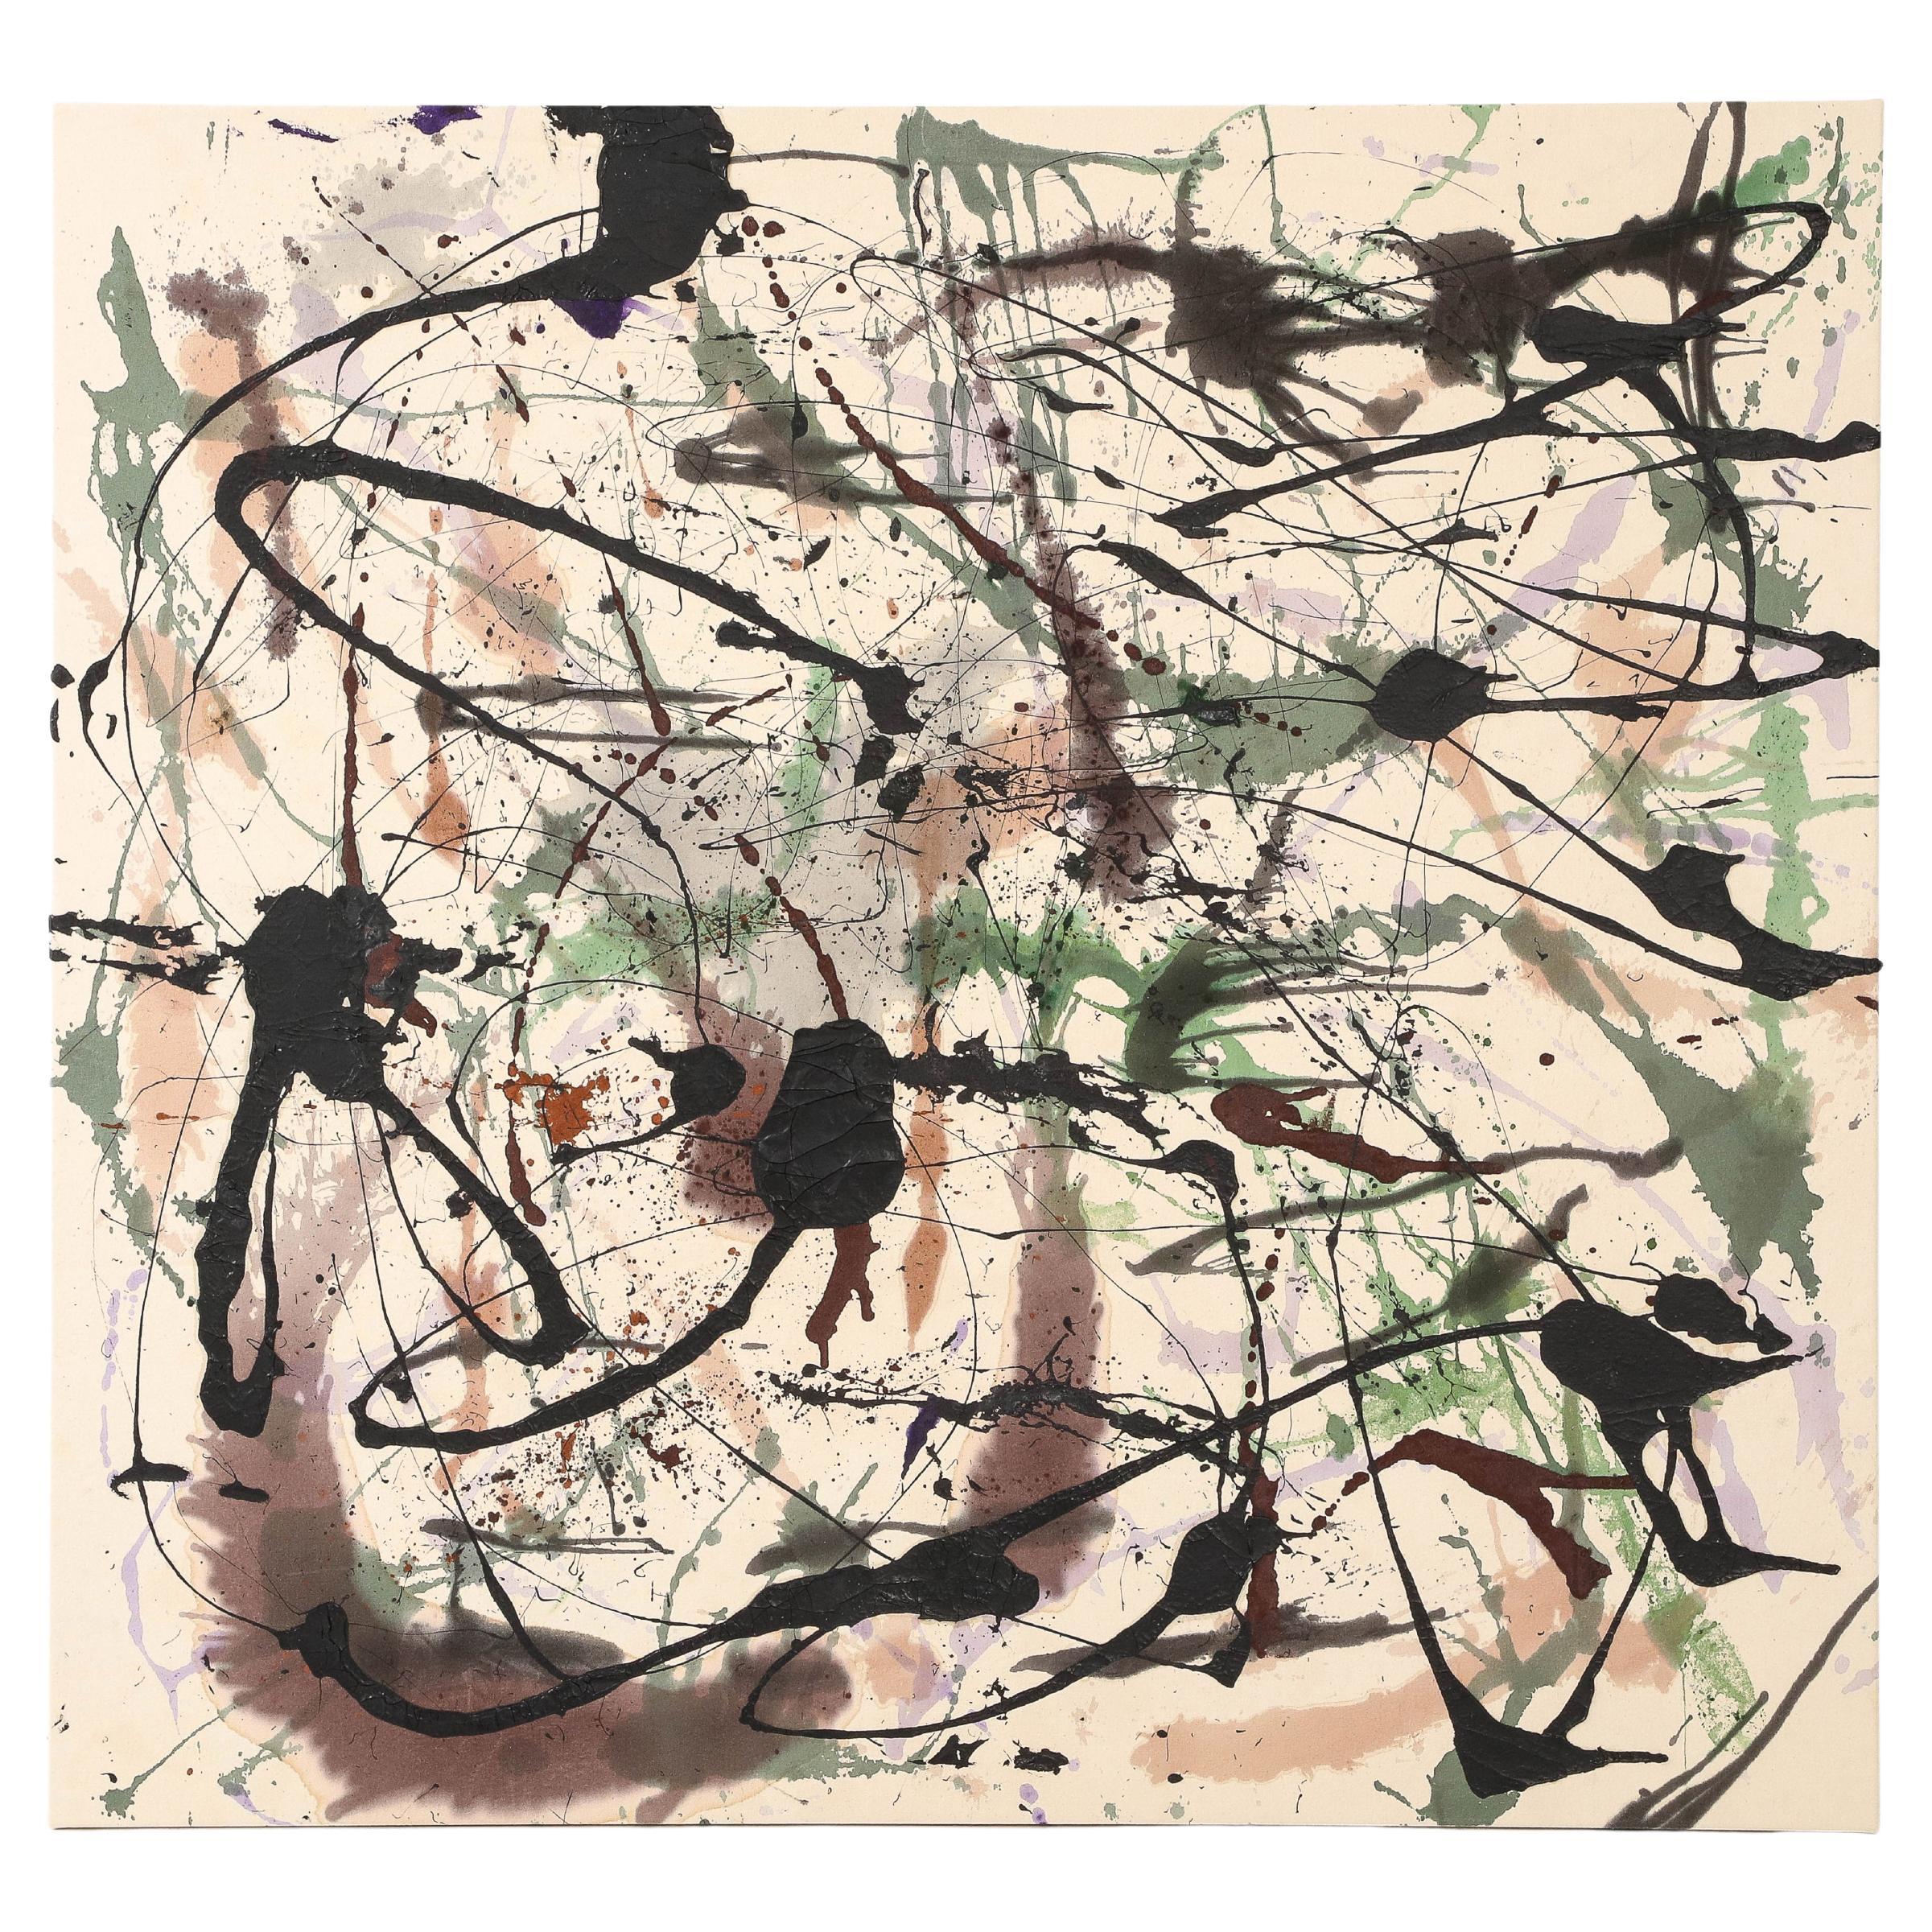 Oeuvre d'art de style Jackson Pollock de l'artiste de Woodstock, NY